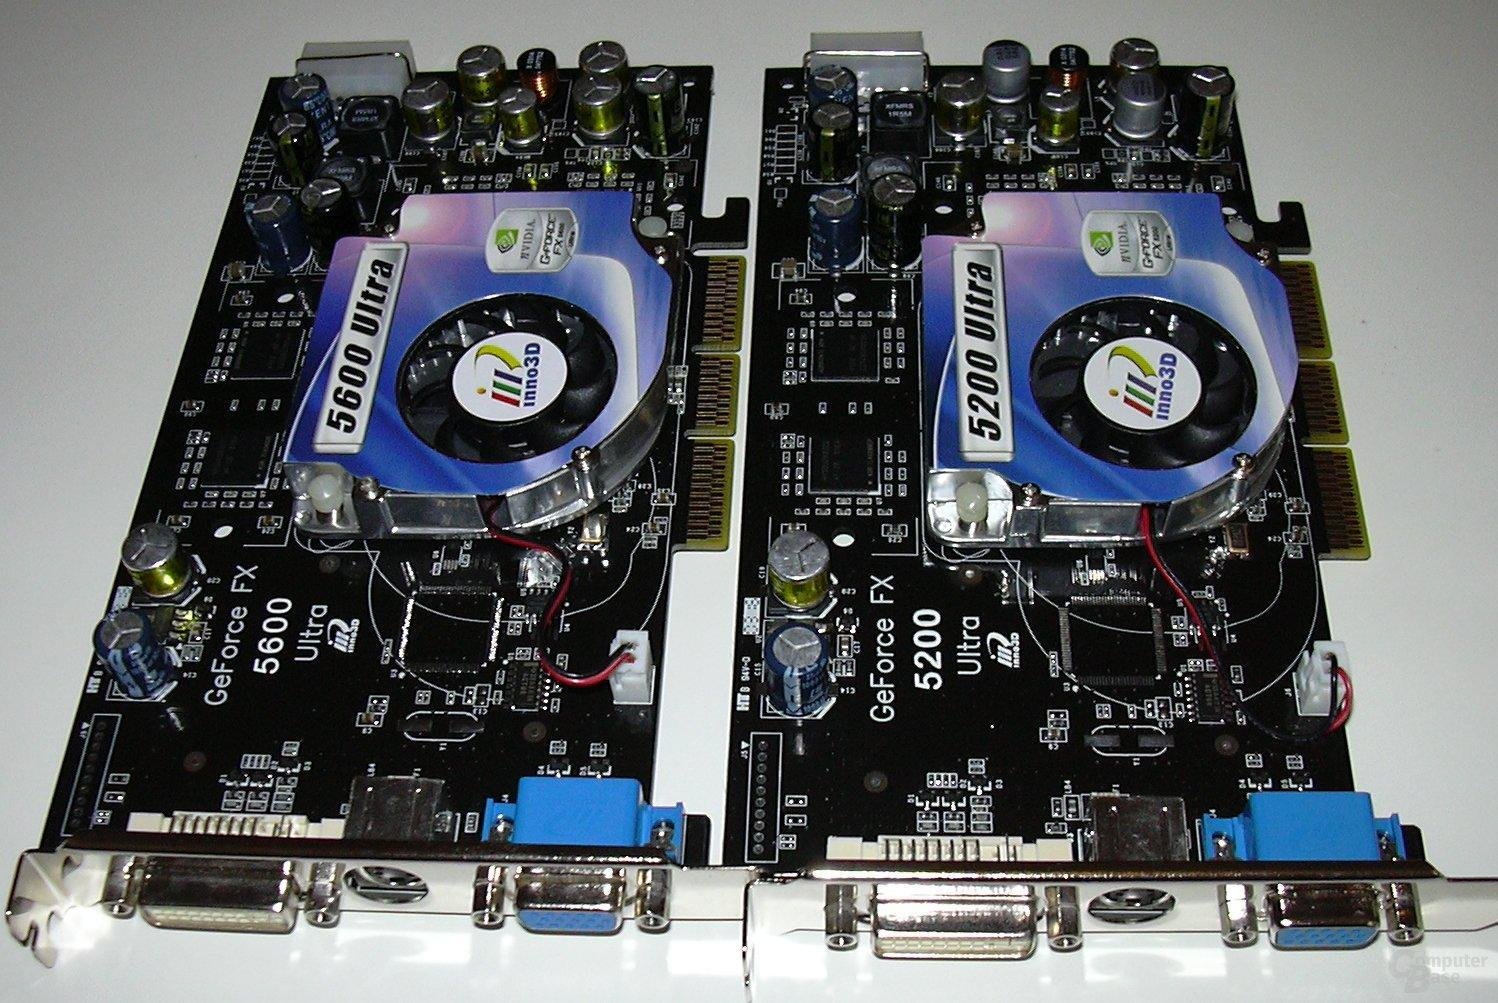 FX5200u vs. FX5600u